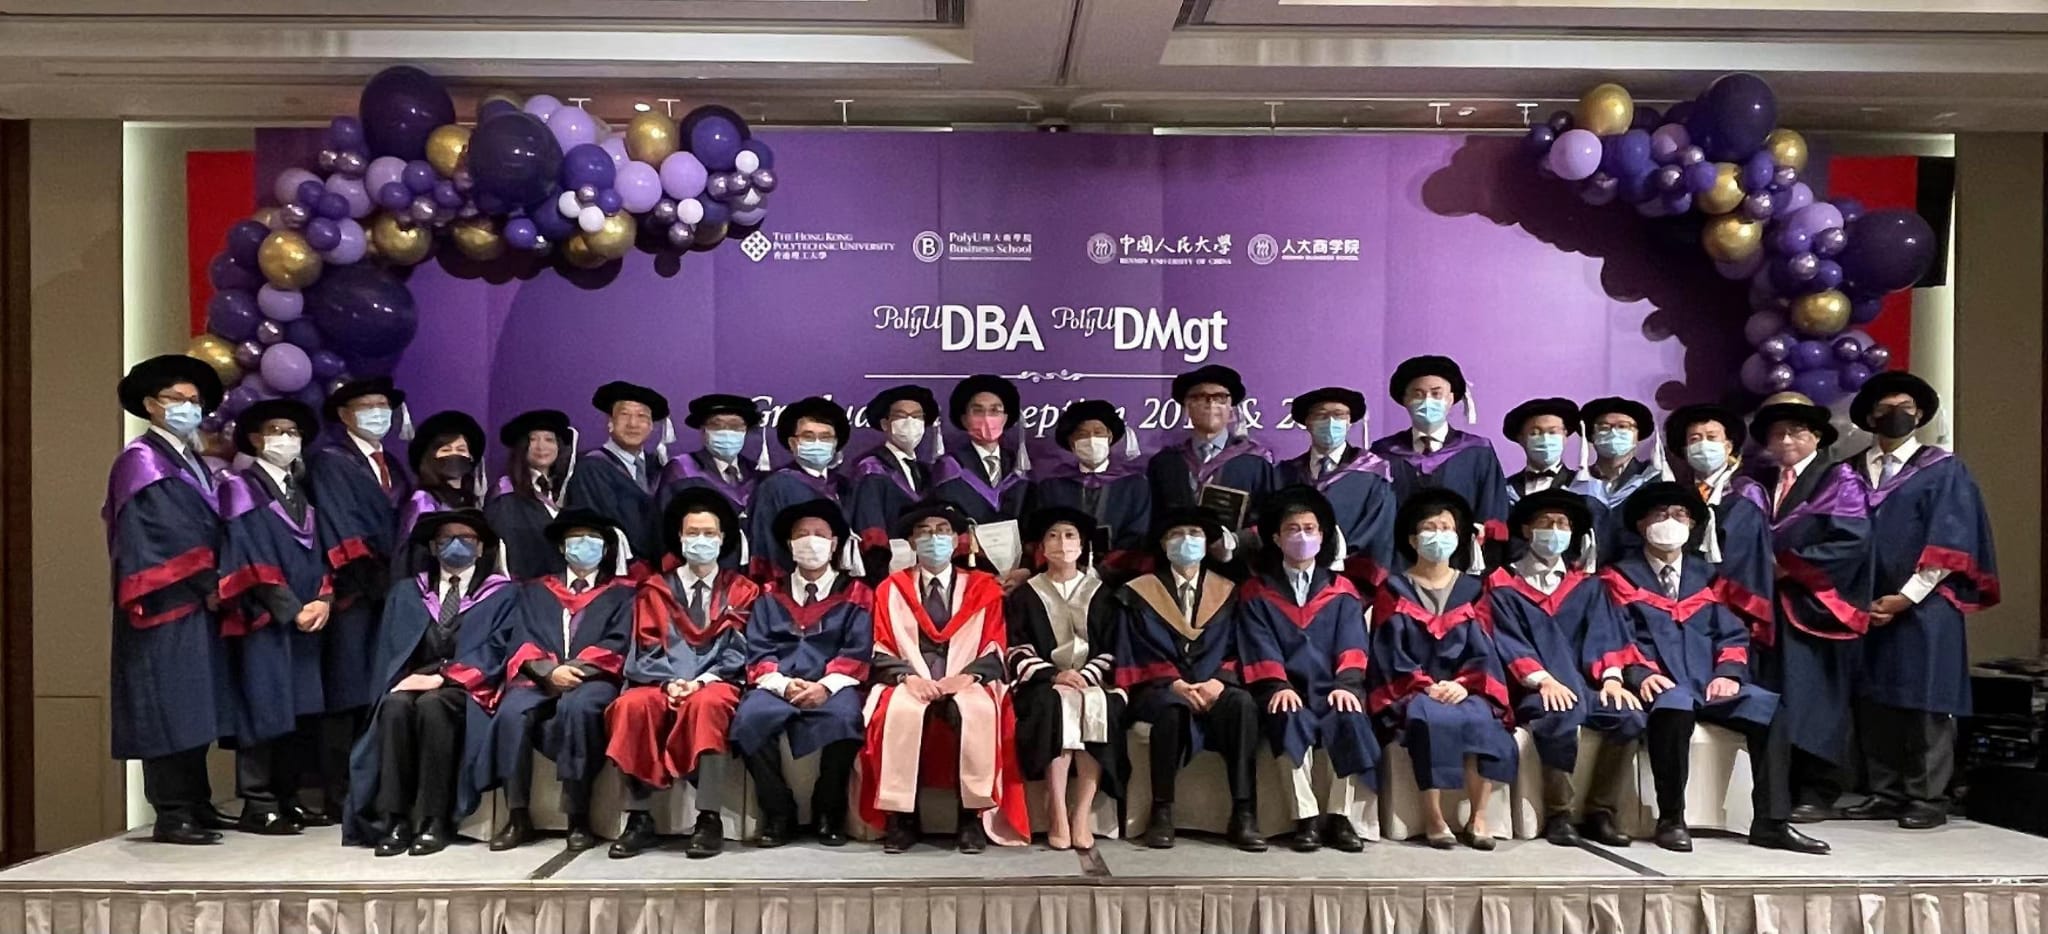 DBA/DMgt Graduation Reception cum Dinner 2019/2020